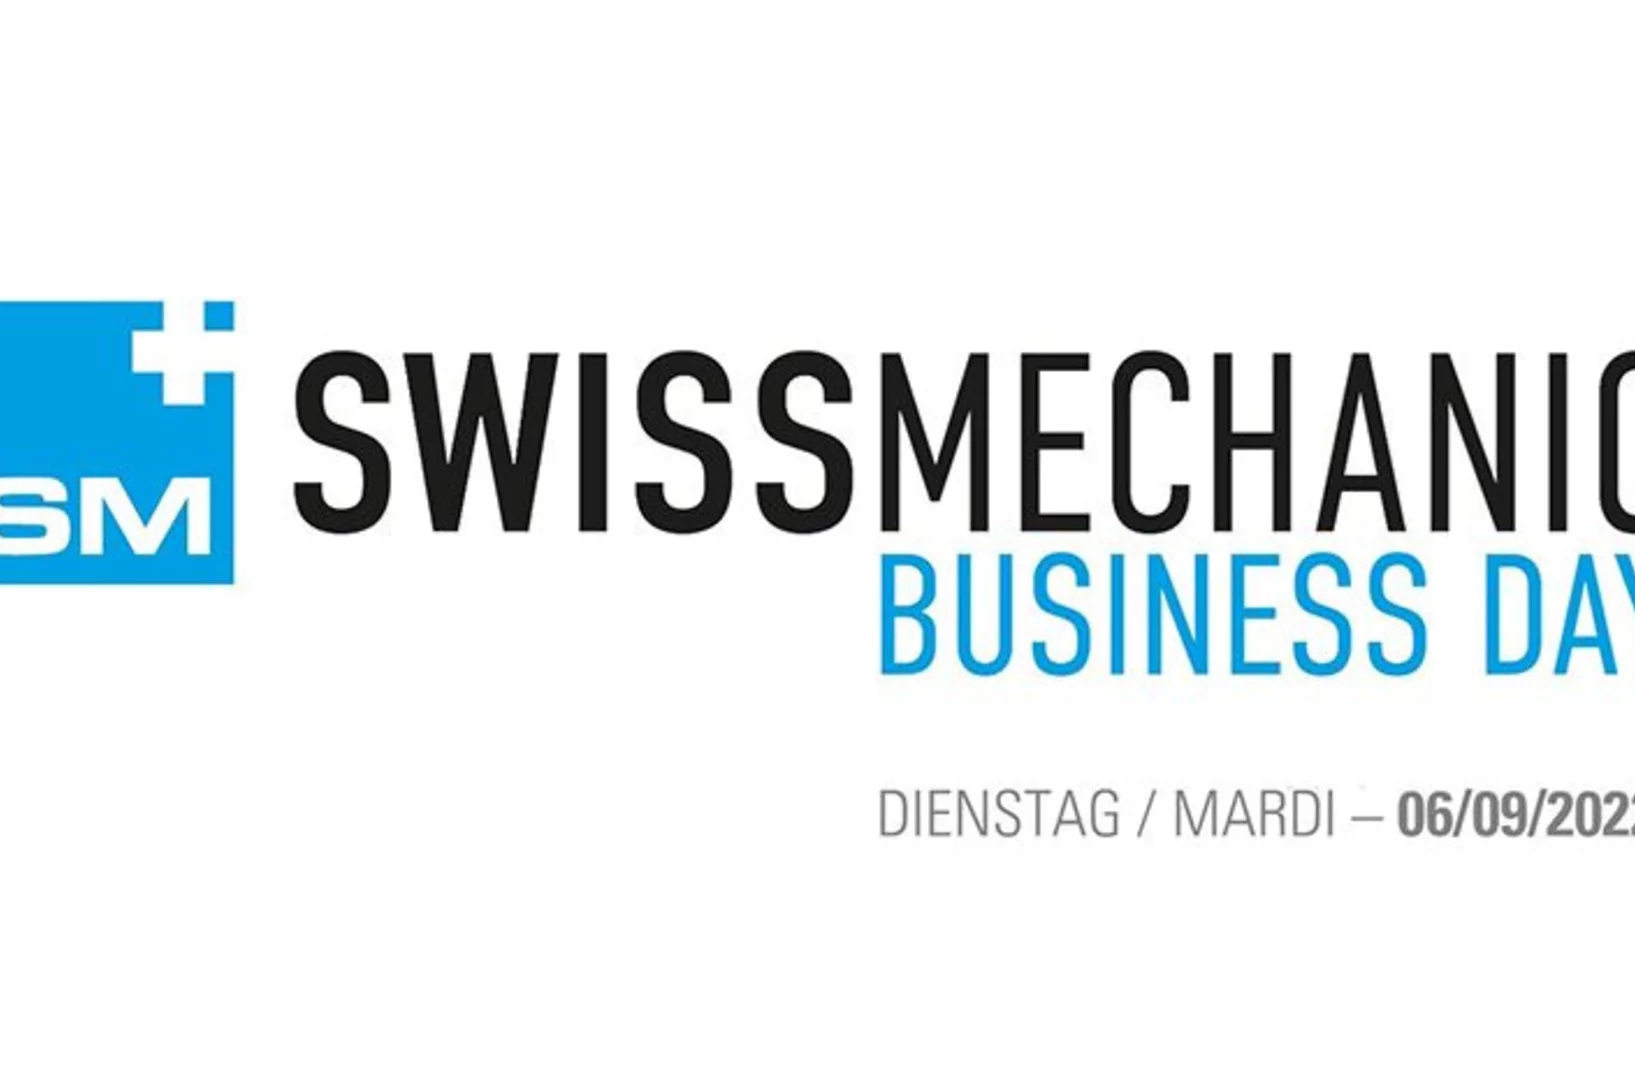 The Swissmechanic Business Day will take place on 6 September 2022 (Source: Swissmechanic)